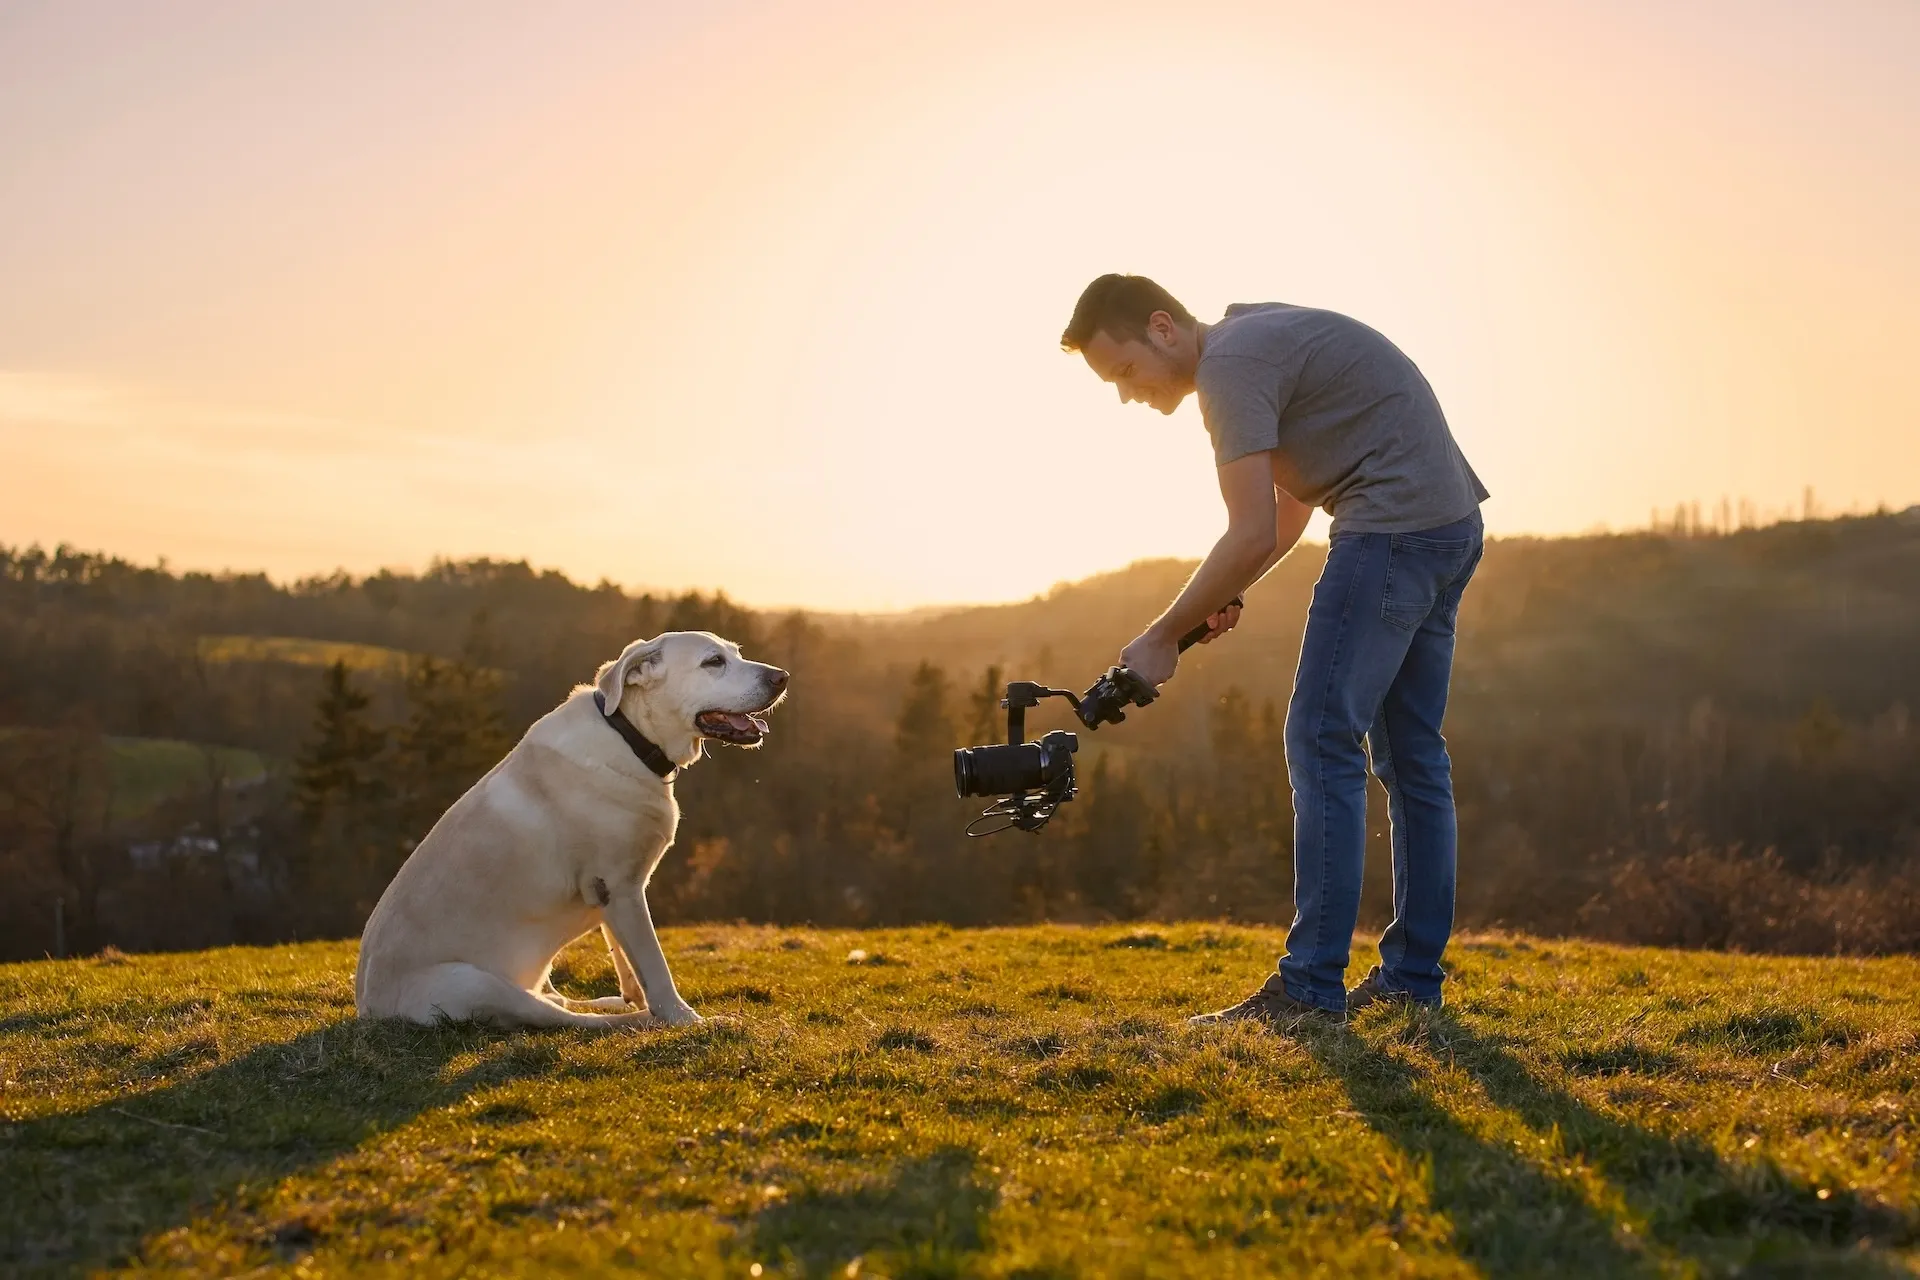 Filming a dog